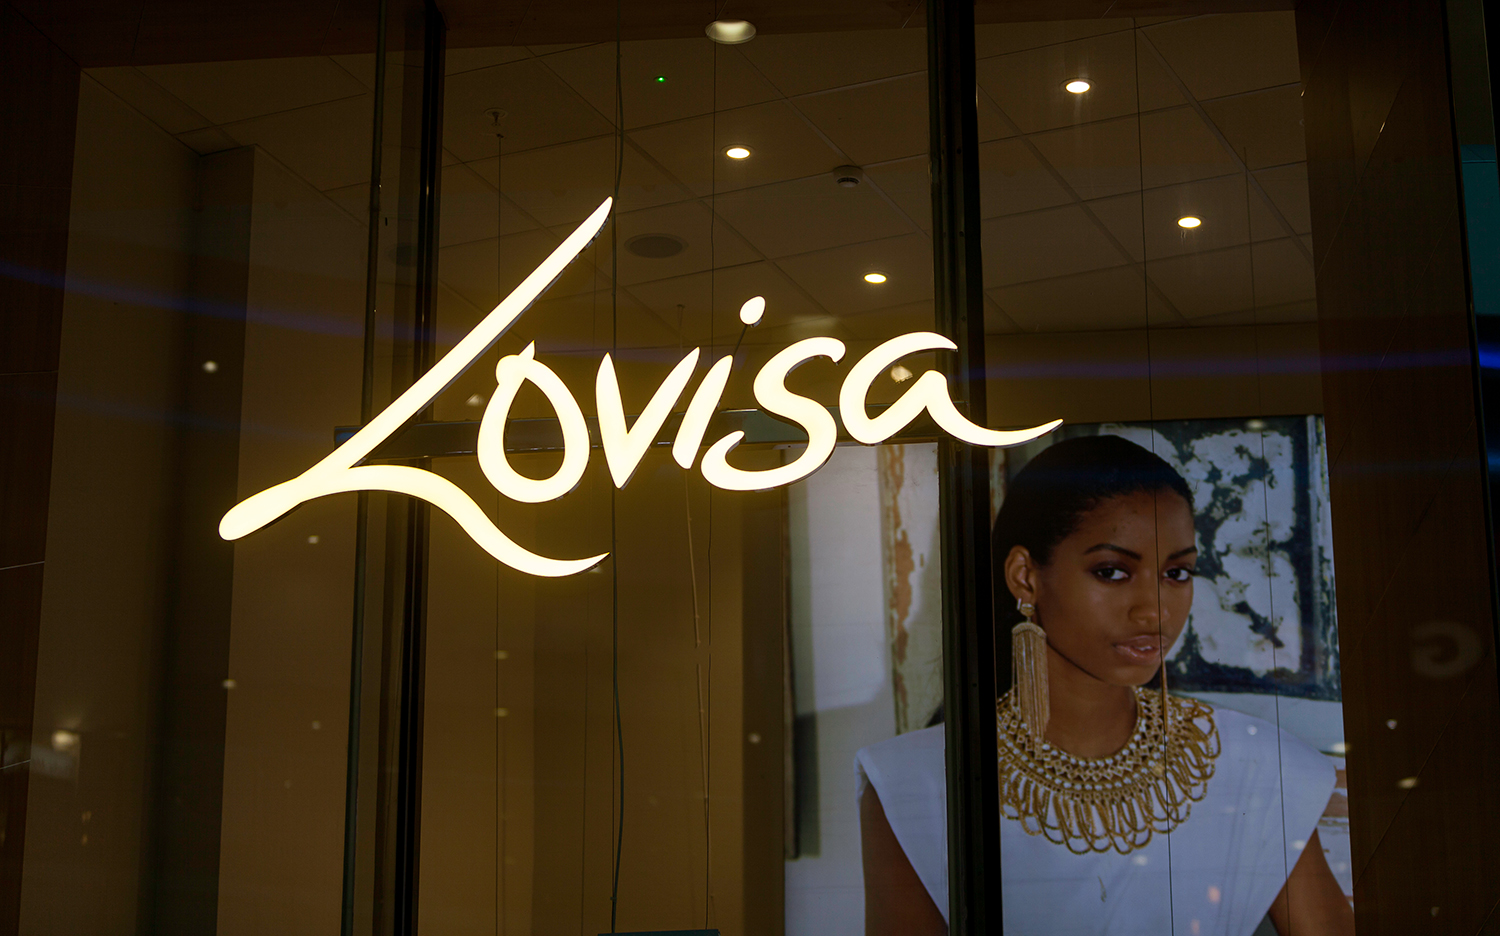 Lovisa (ASX:LOV) to expand European holding